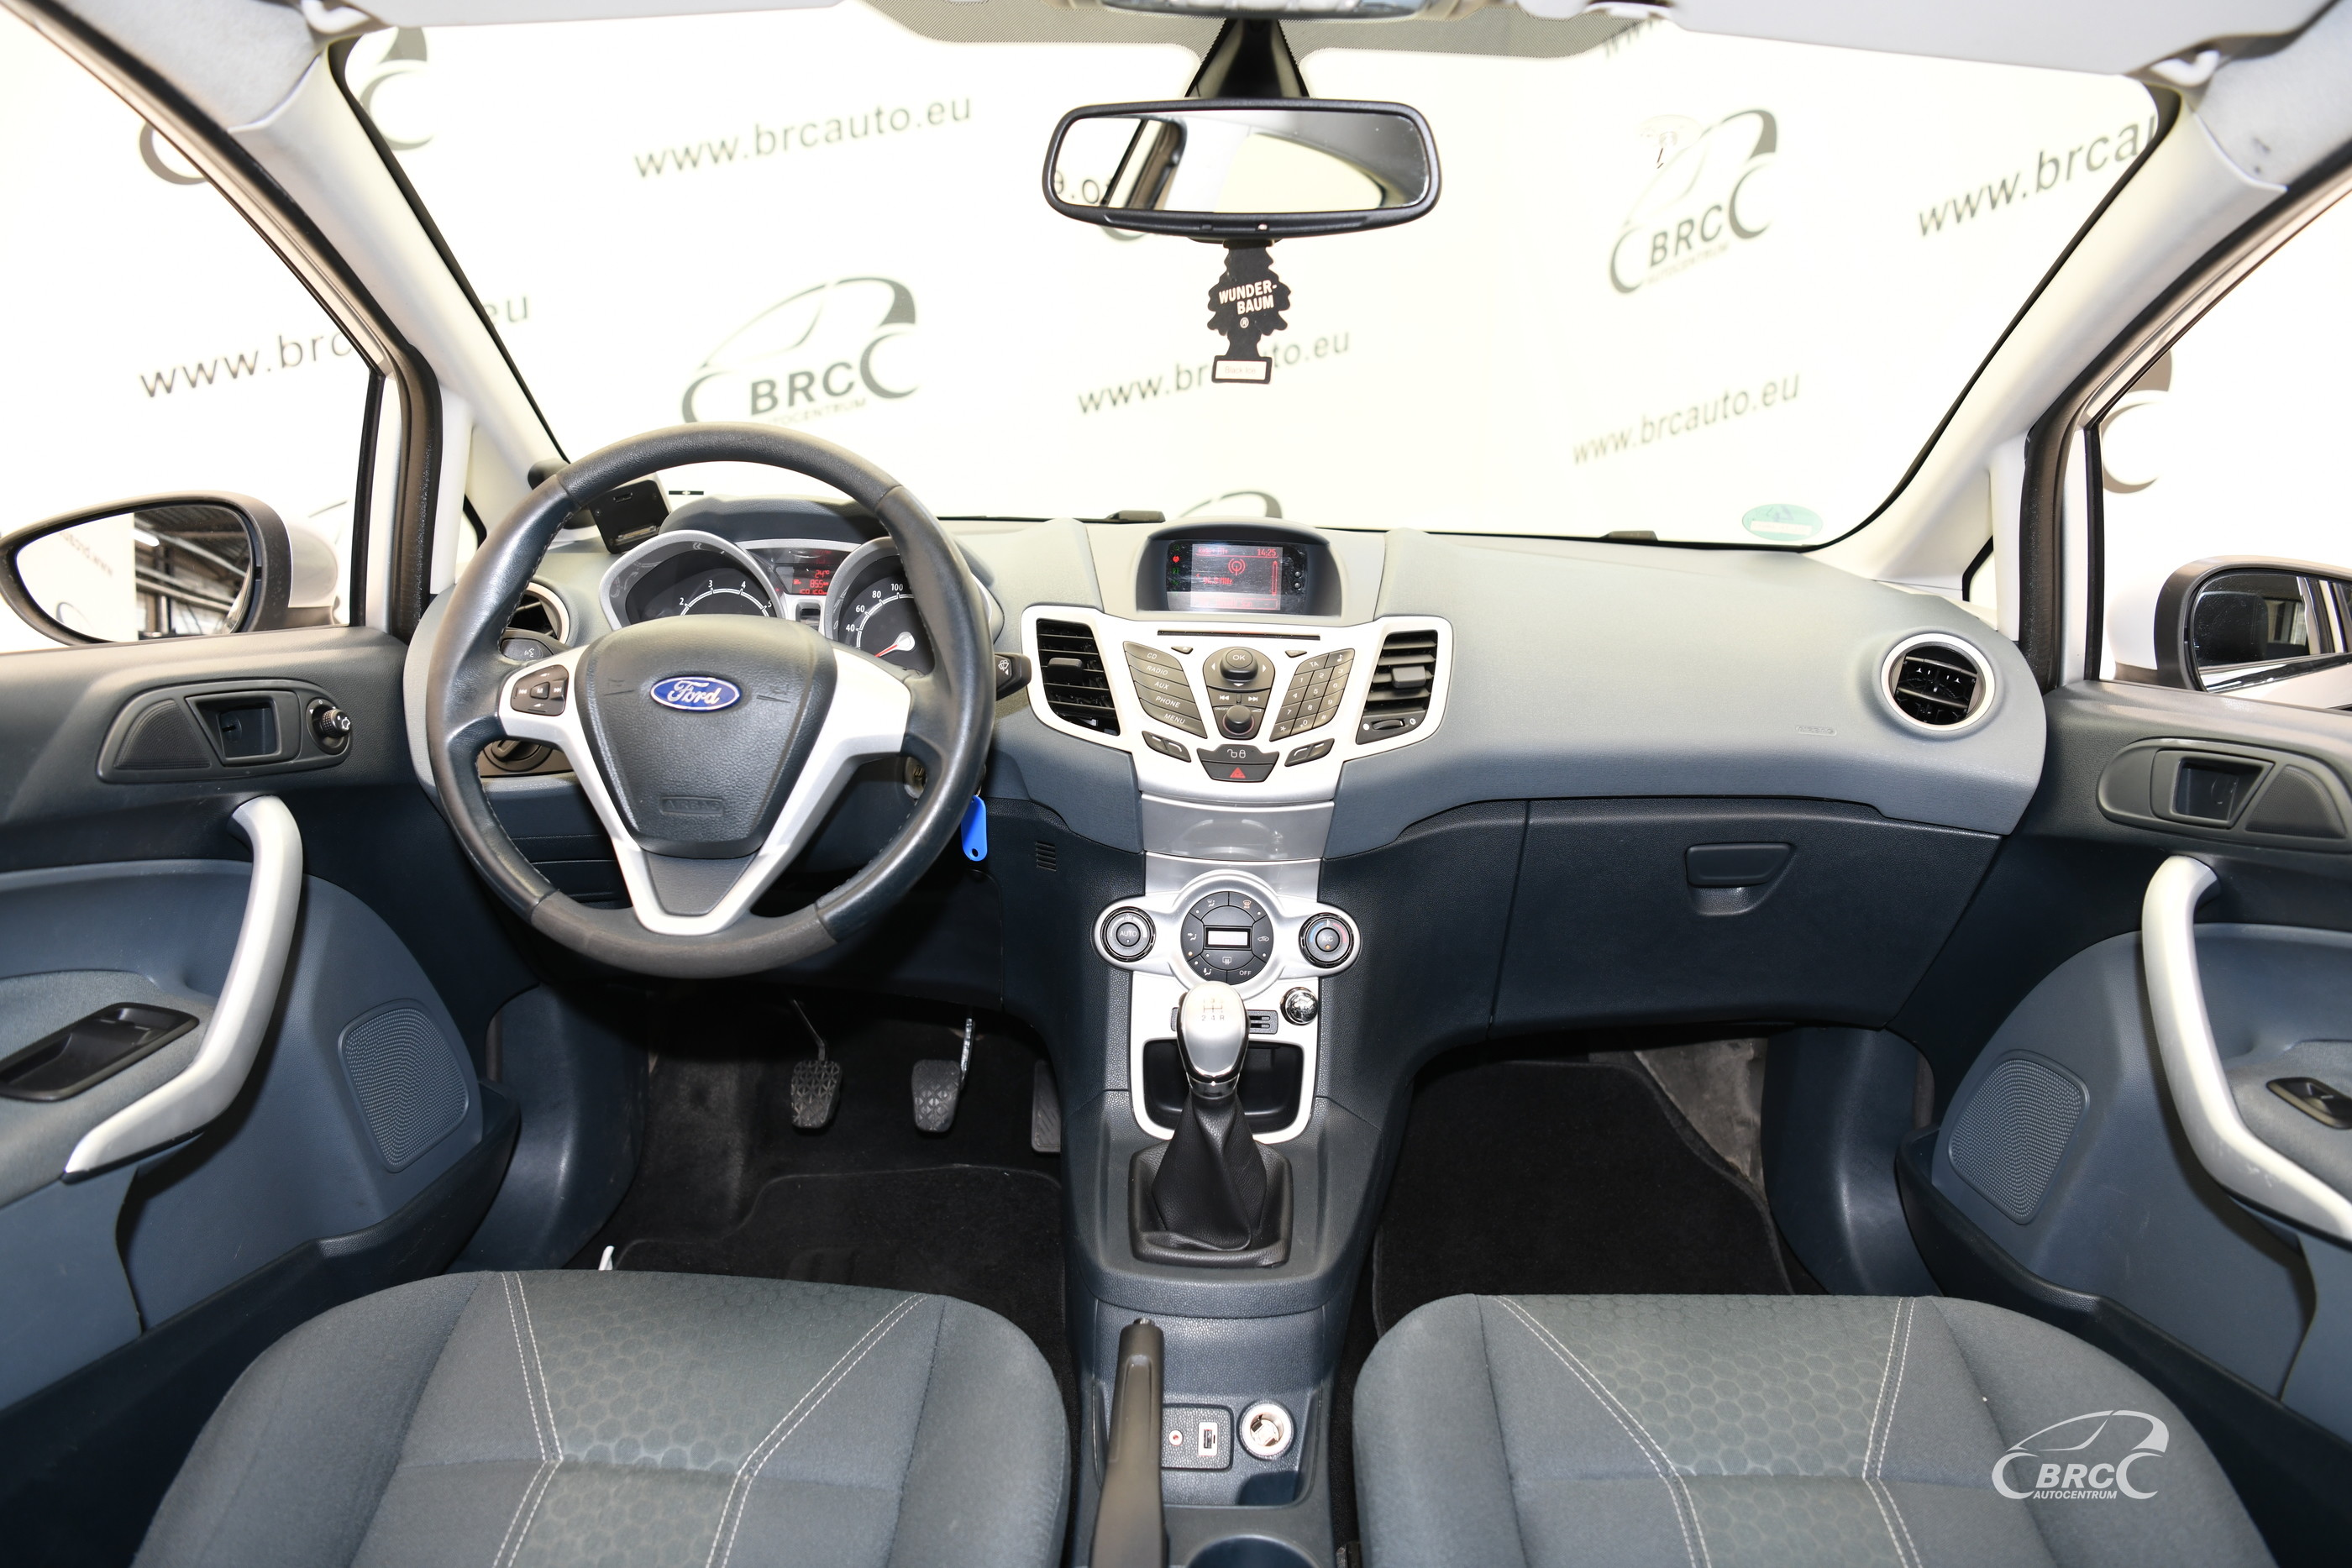 Ford Fiesta 1.2 Trend